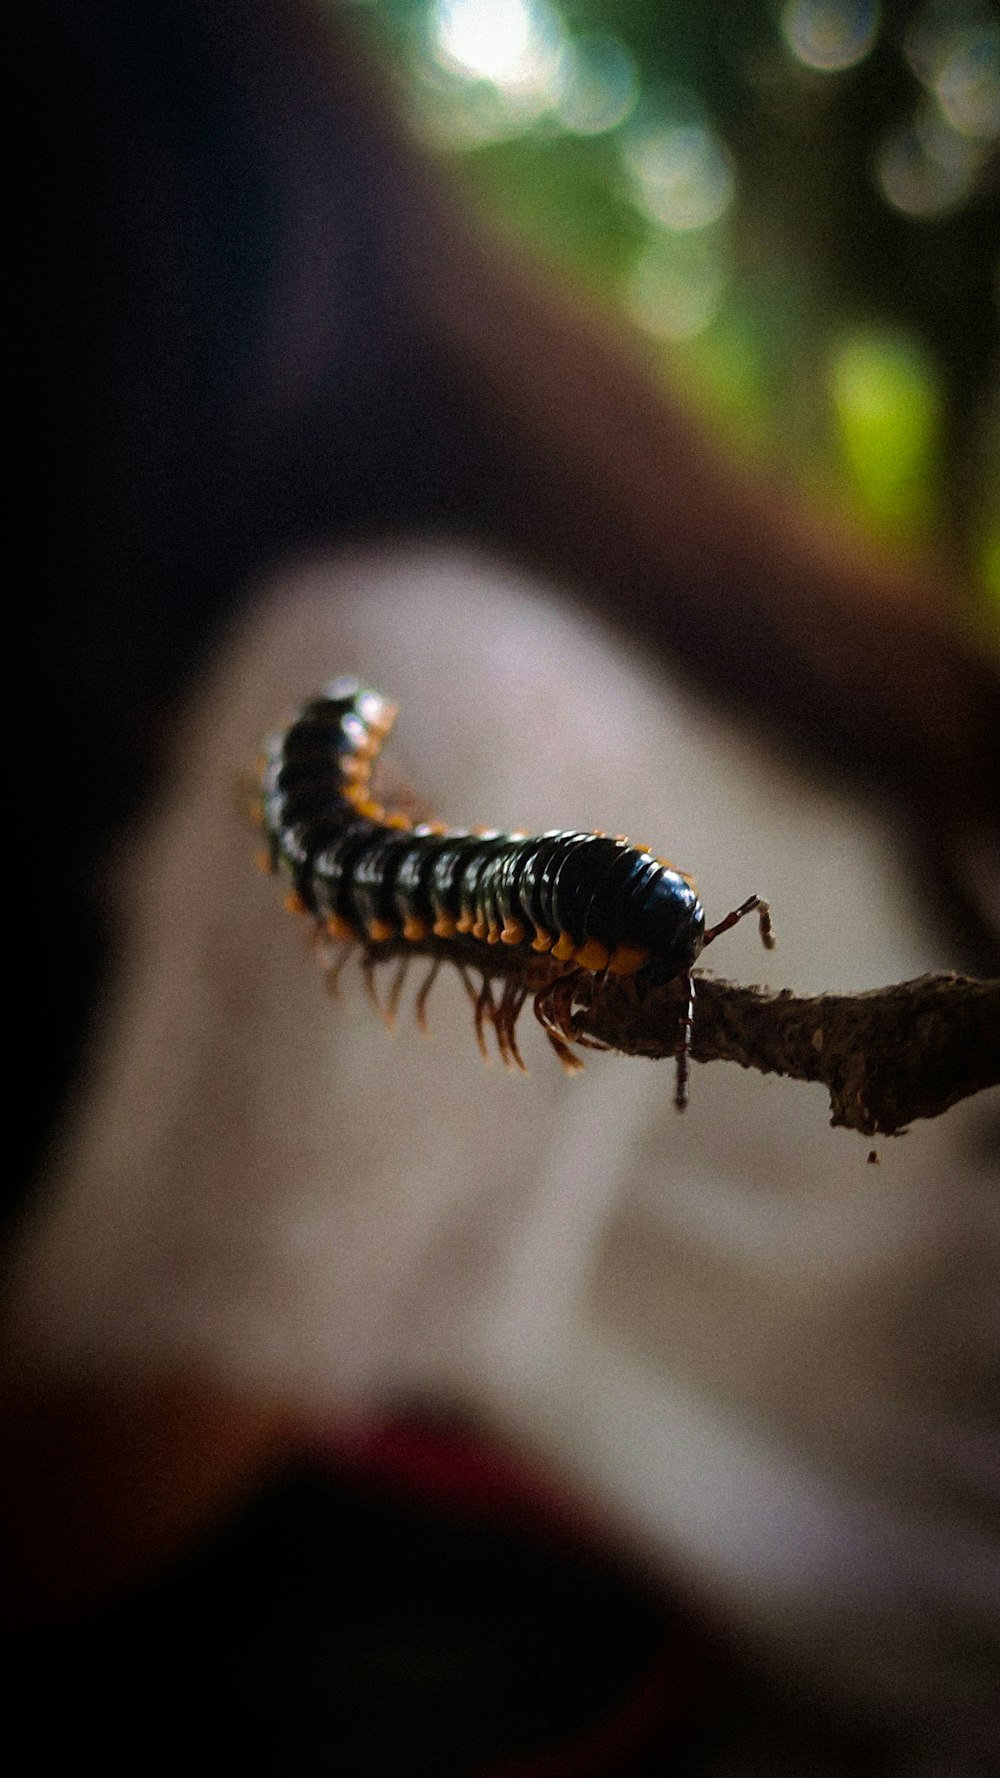 a caterpillar crawling on a twig